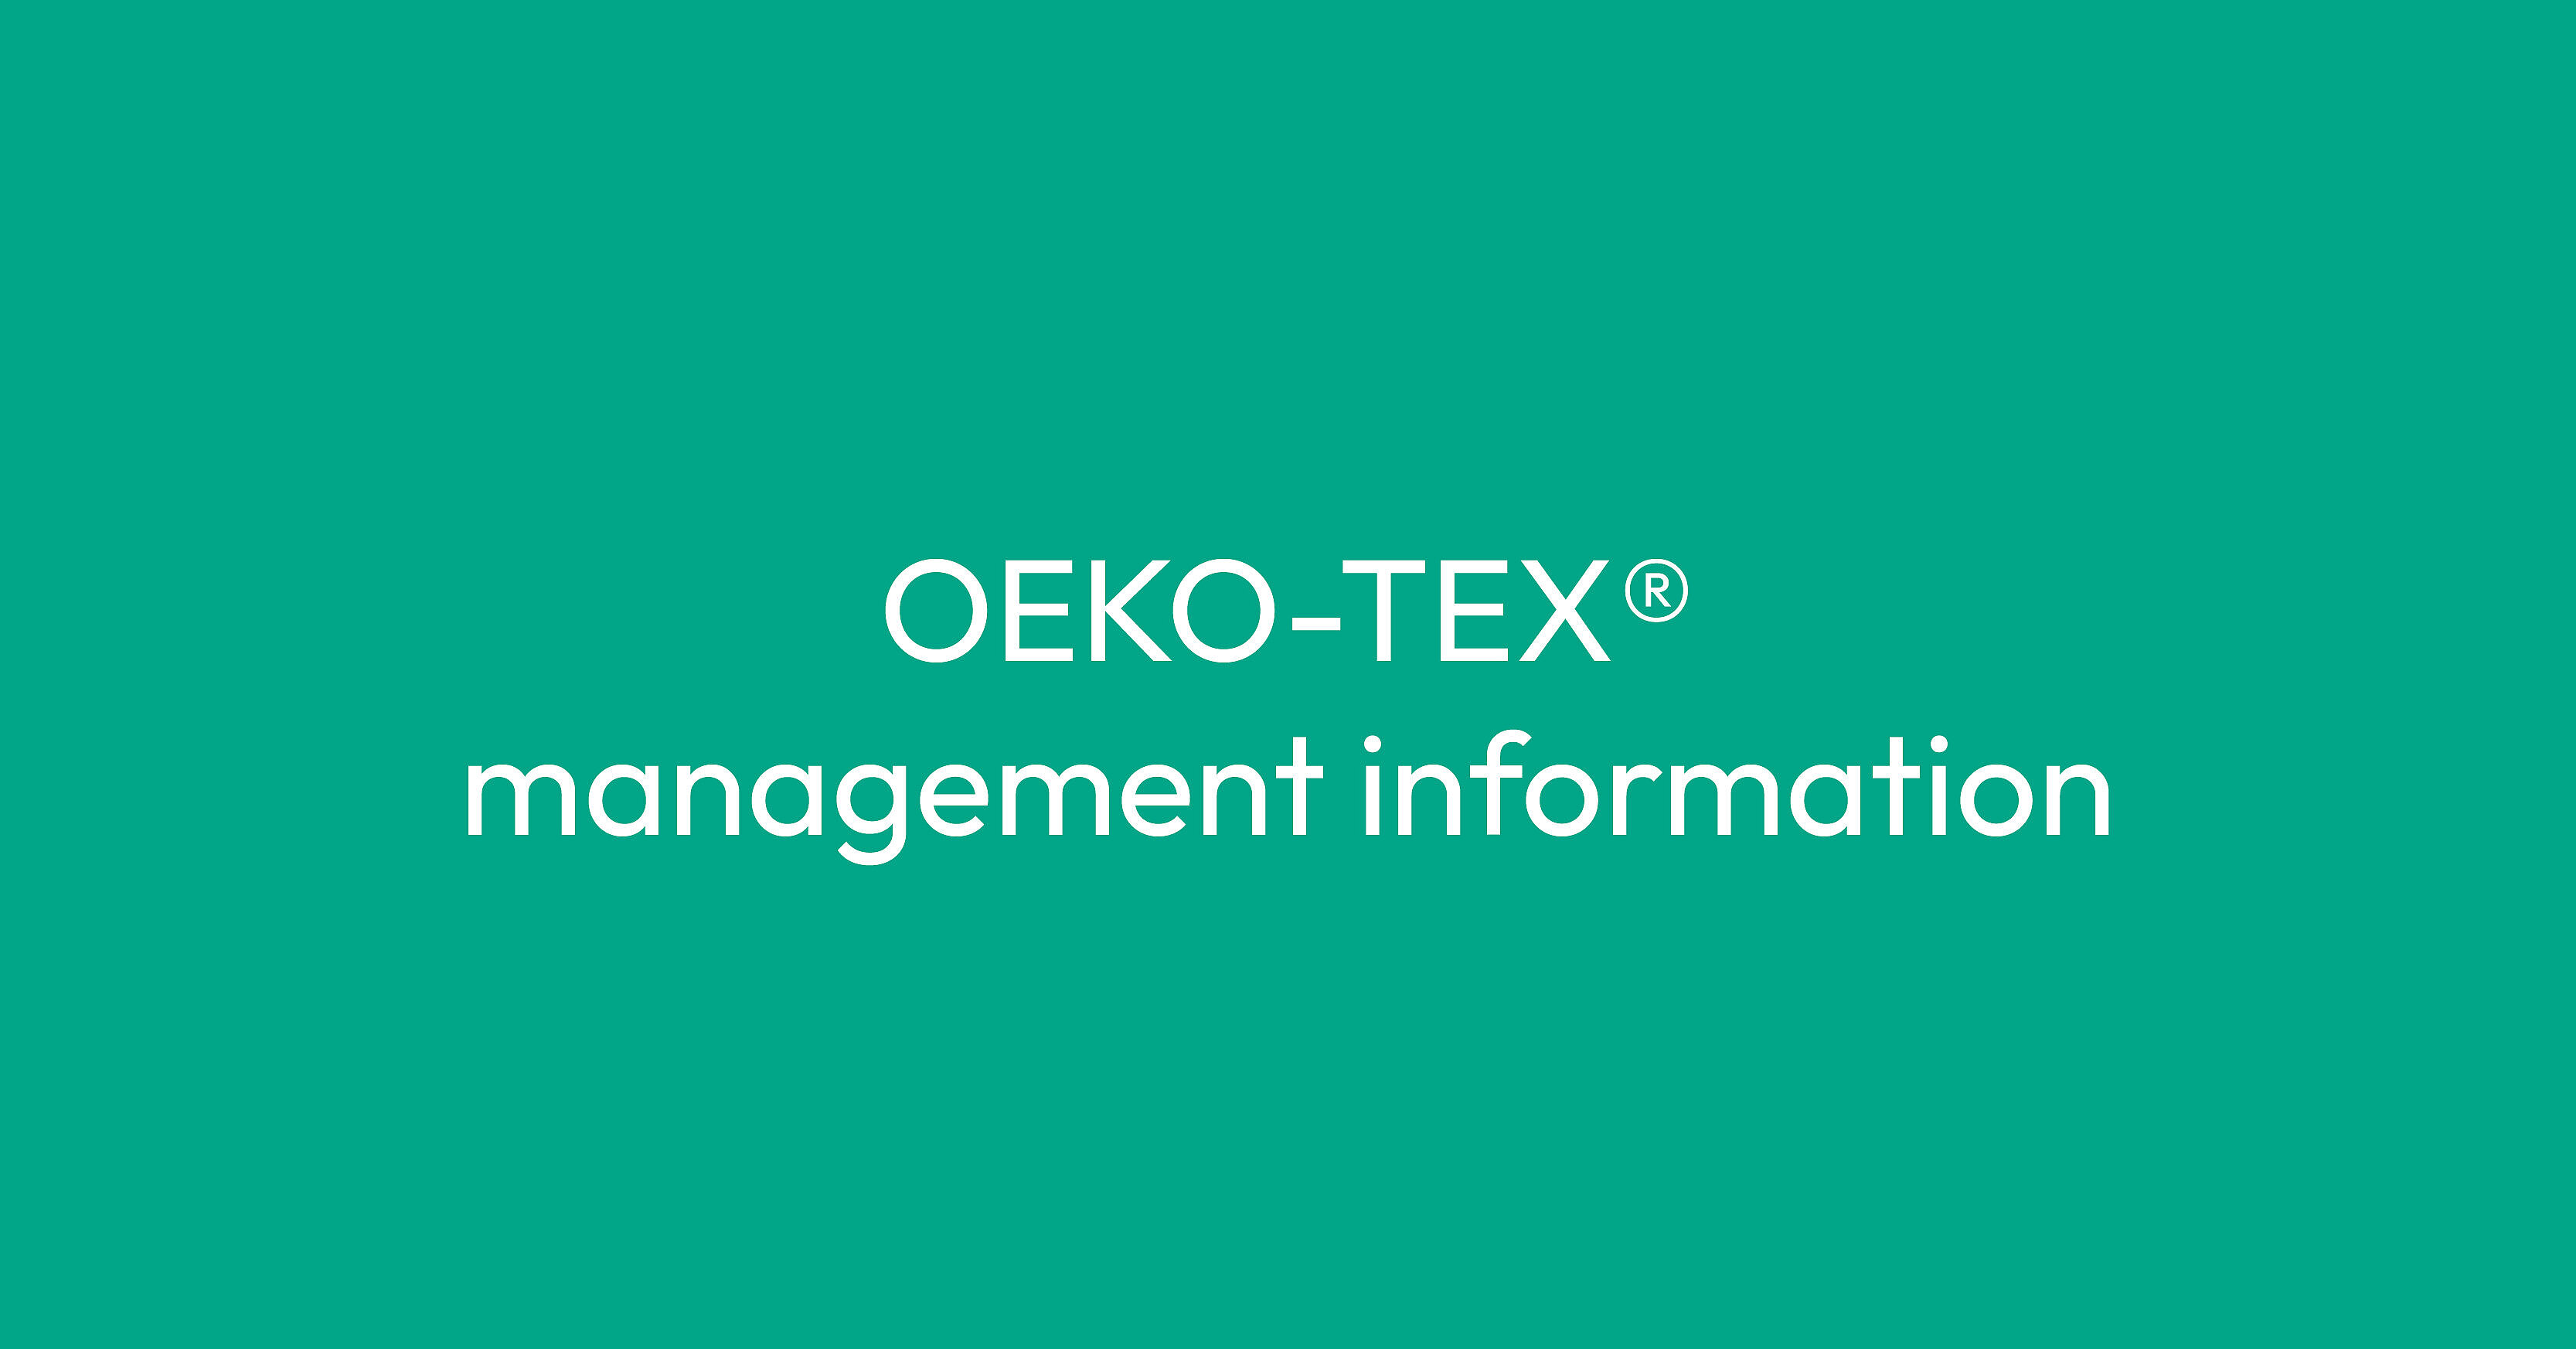 OEKO-TEX® RESPONSIBLE BUSINESS Q&A – Testex